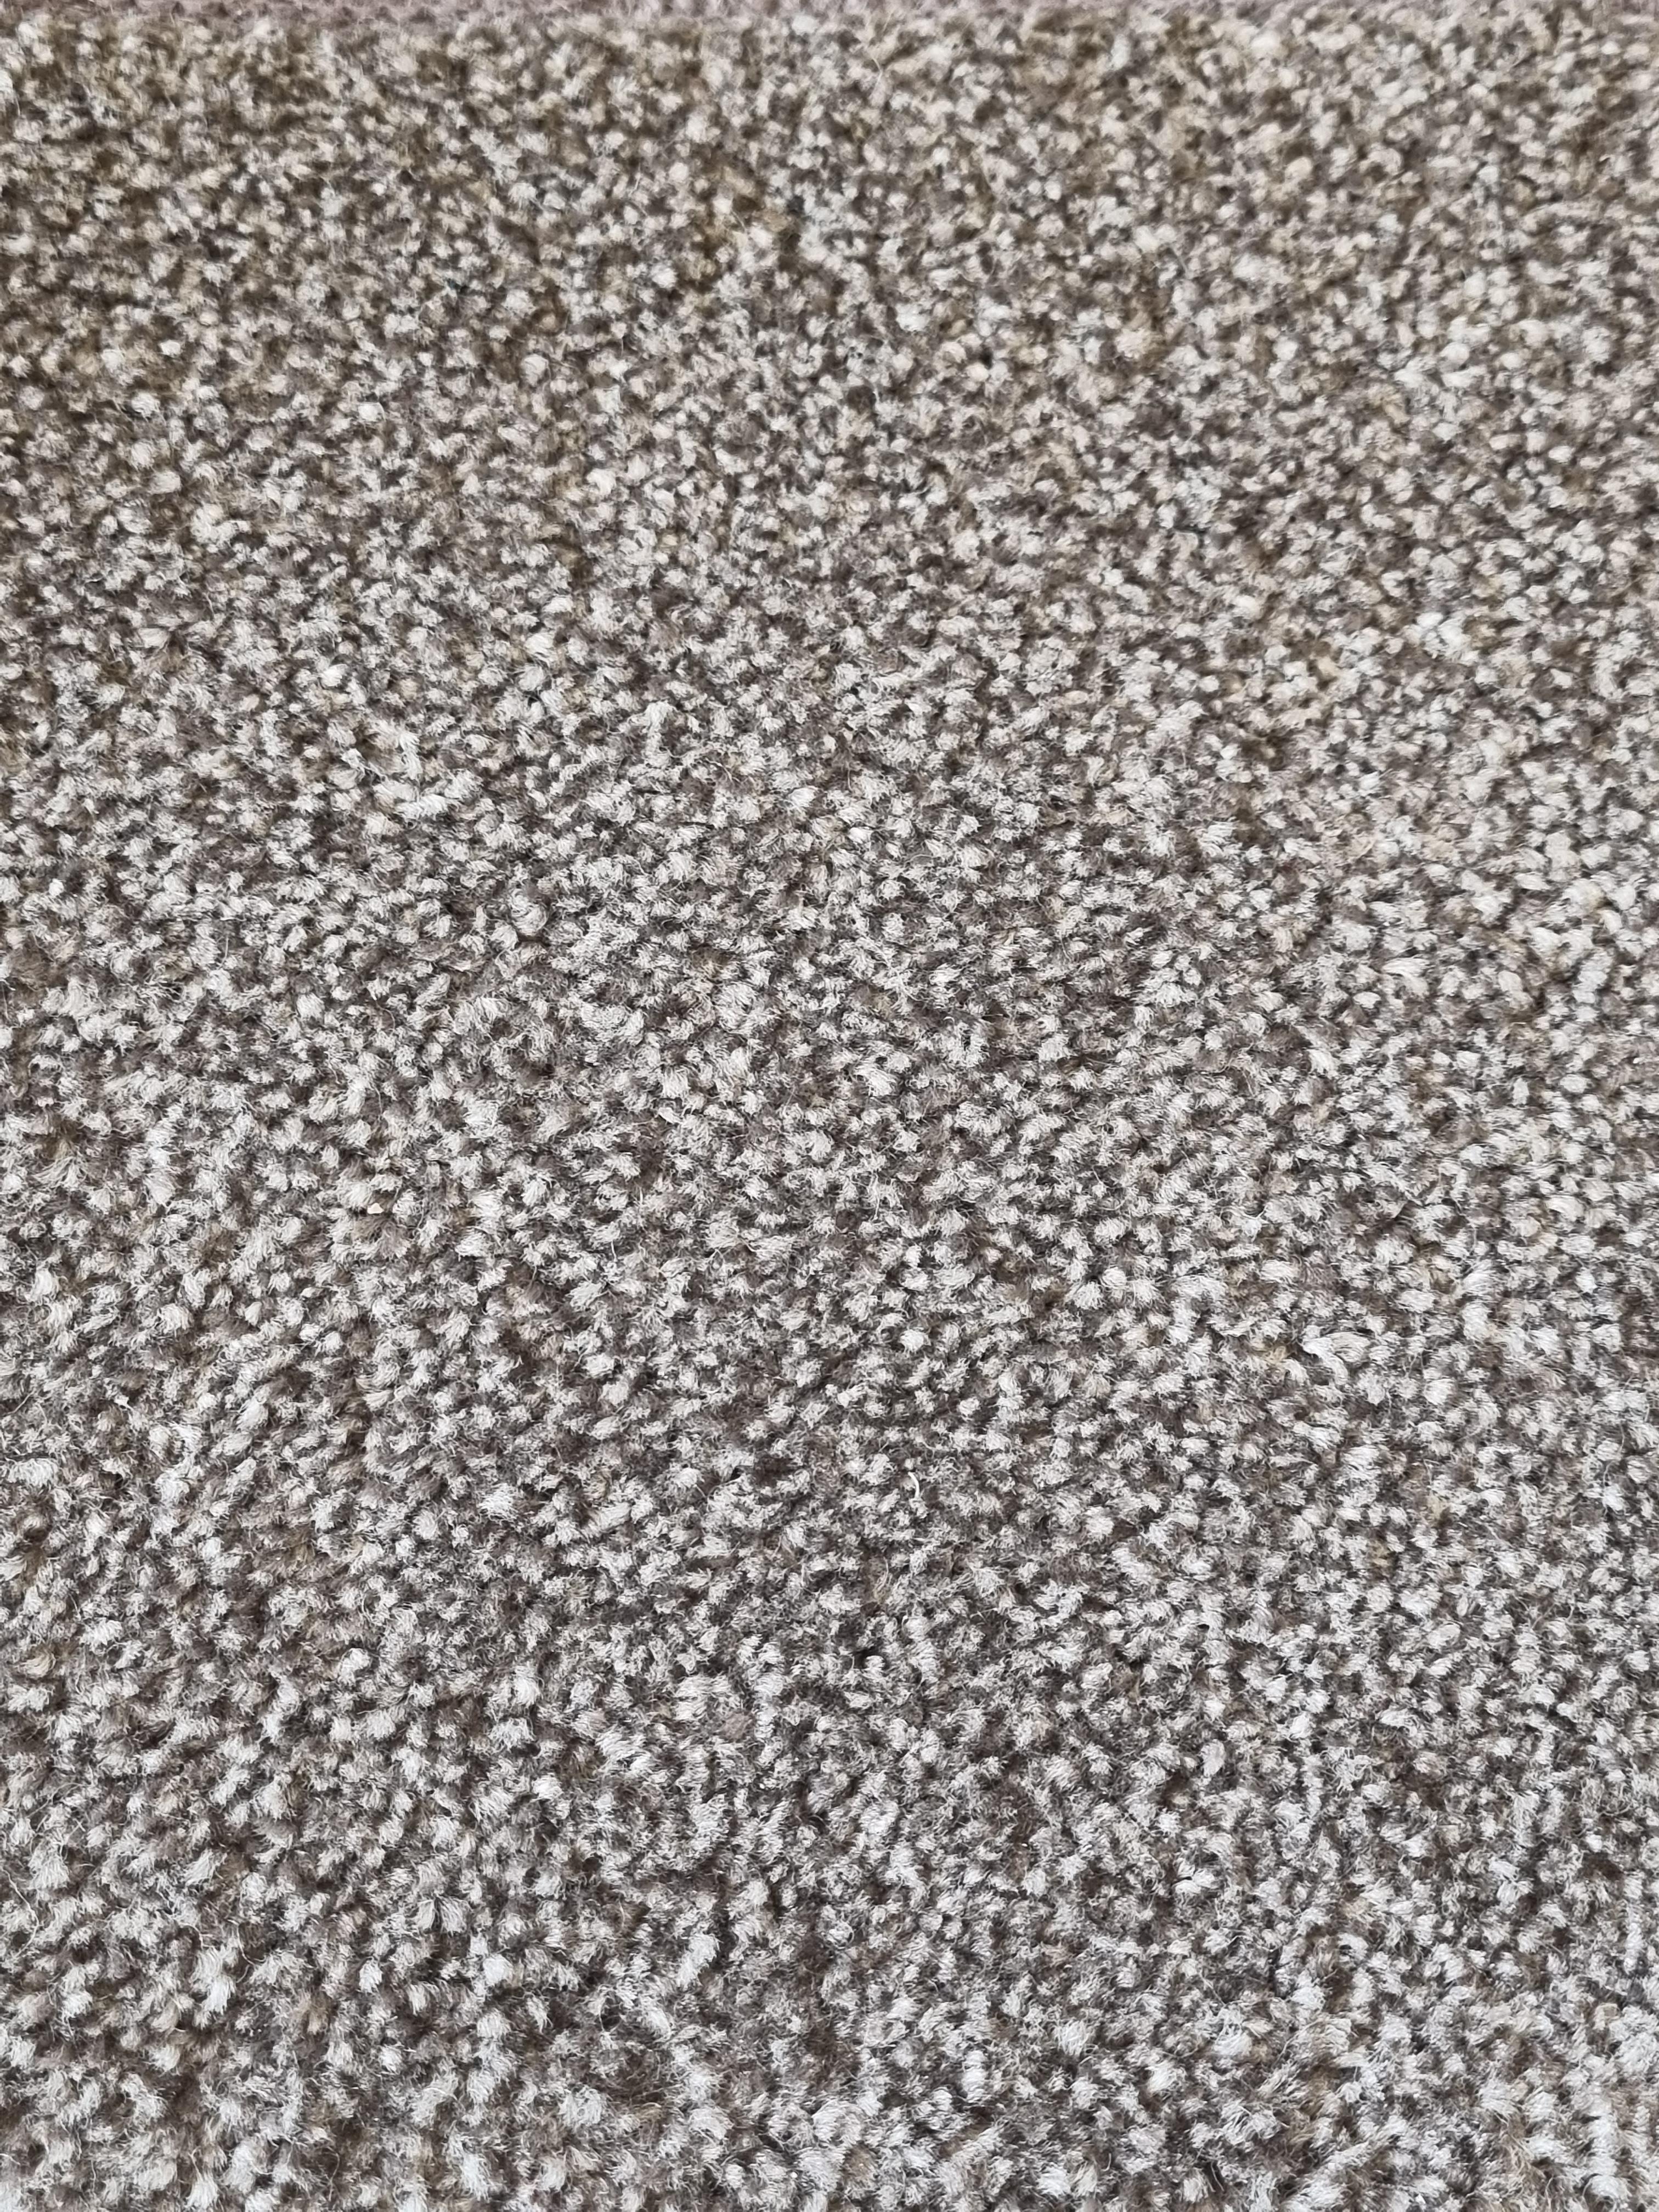 Durban carpet